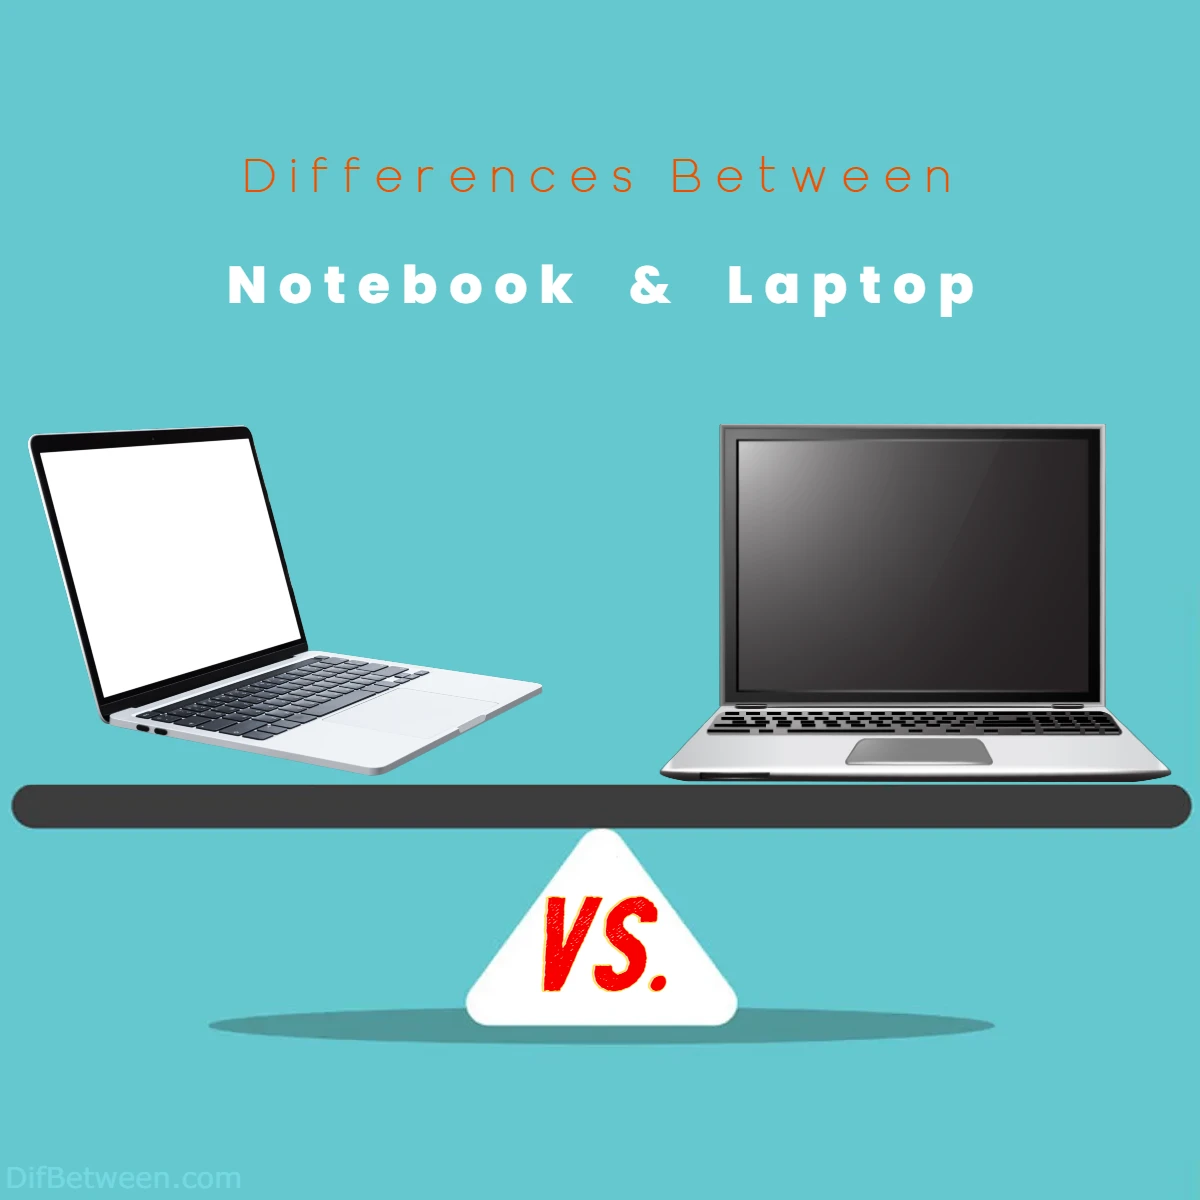 Differences Between Notebook vs Laptop